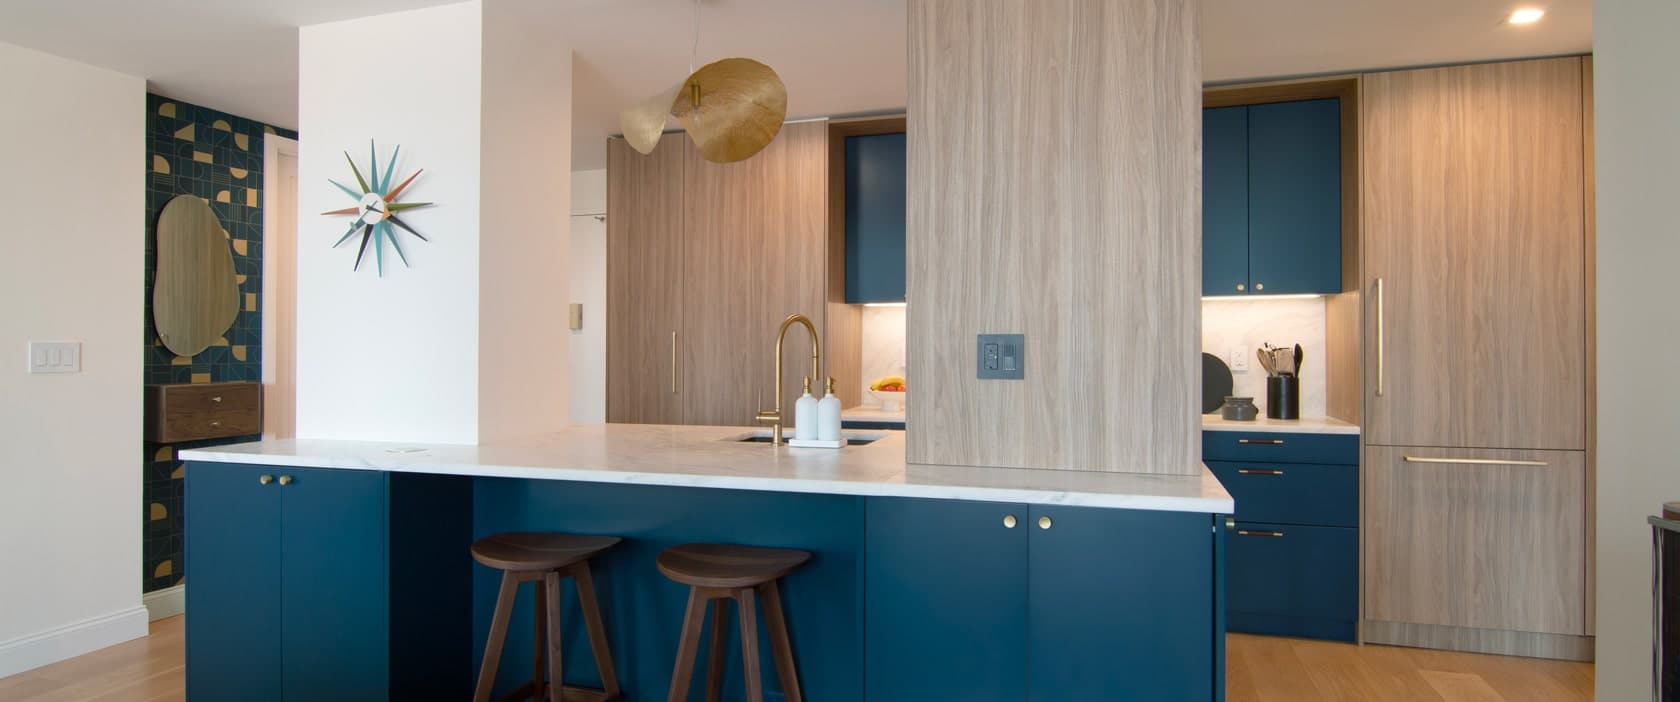 Modern Manhattan kitchen using MandiCasa cabinets in a deep blue palette with bronze accents